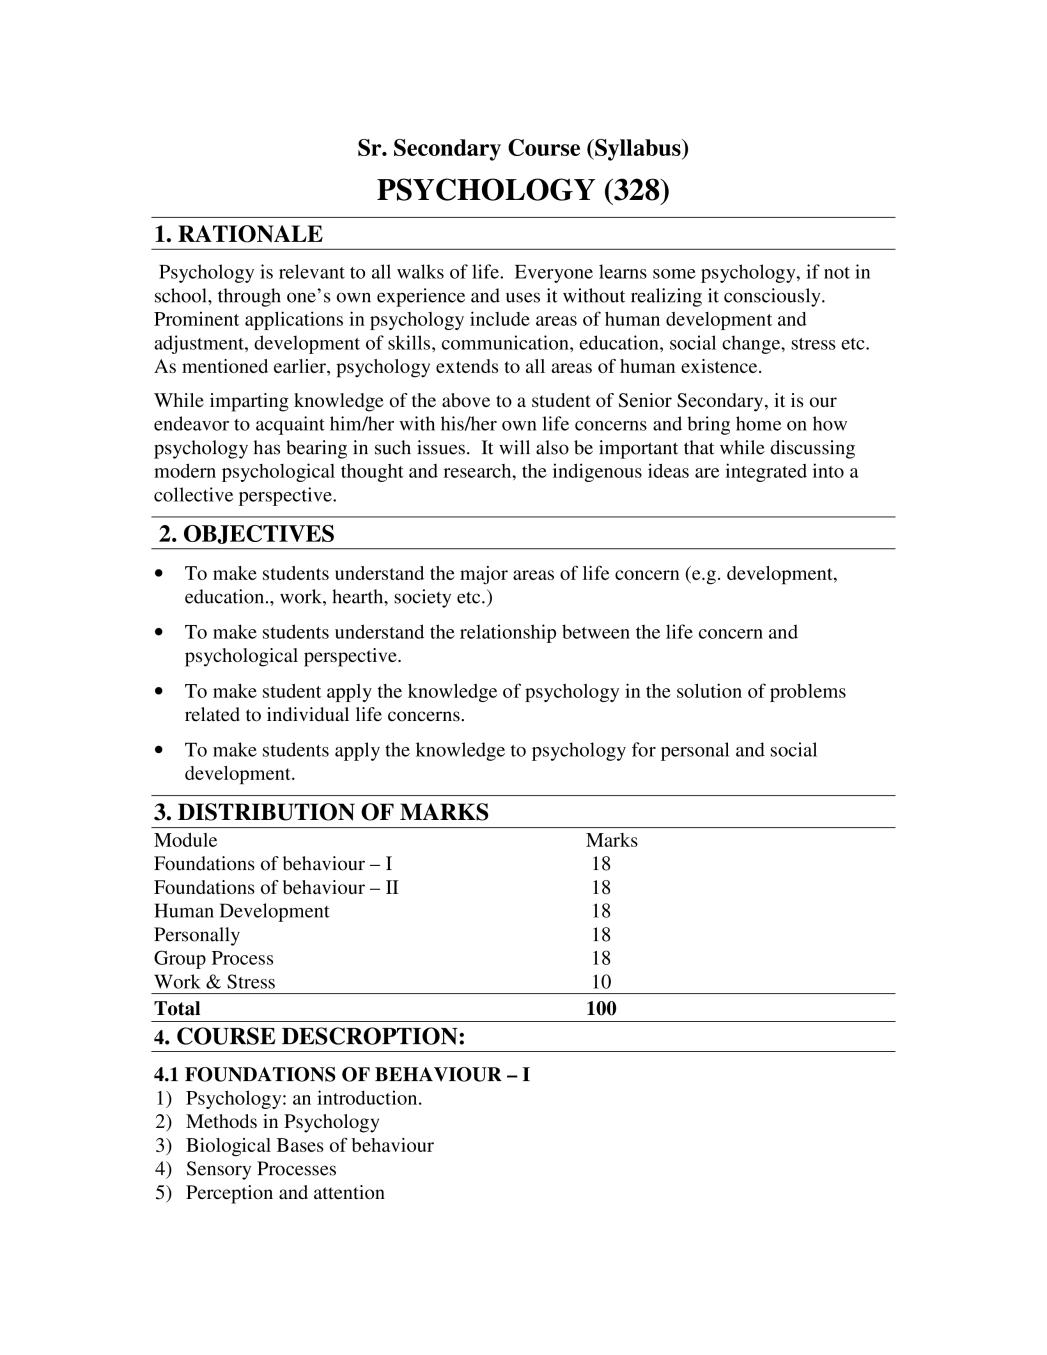 NIOS Class 12 Syllabus - Psychology - Page 1